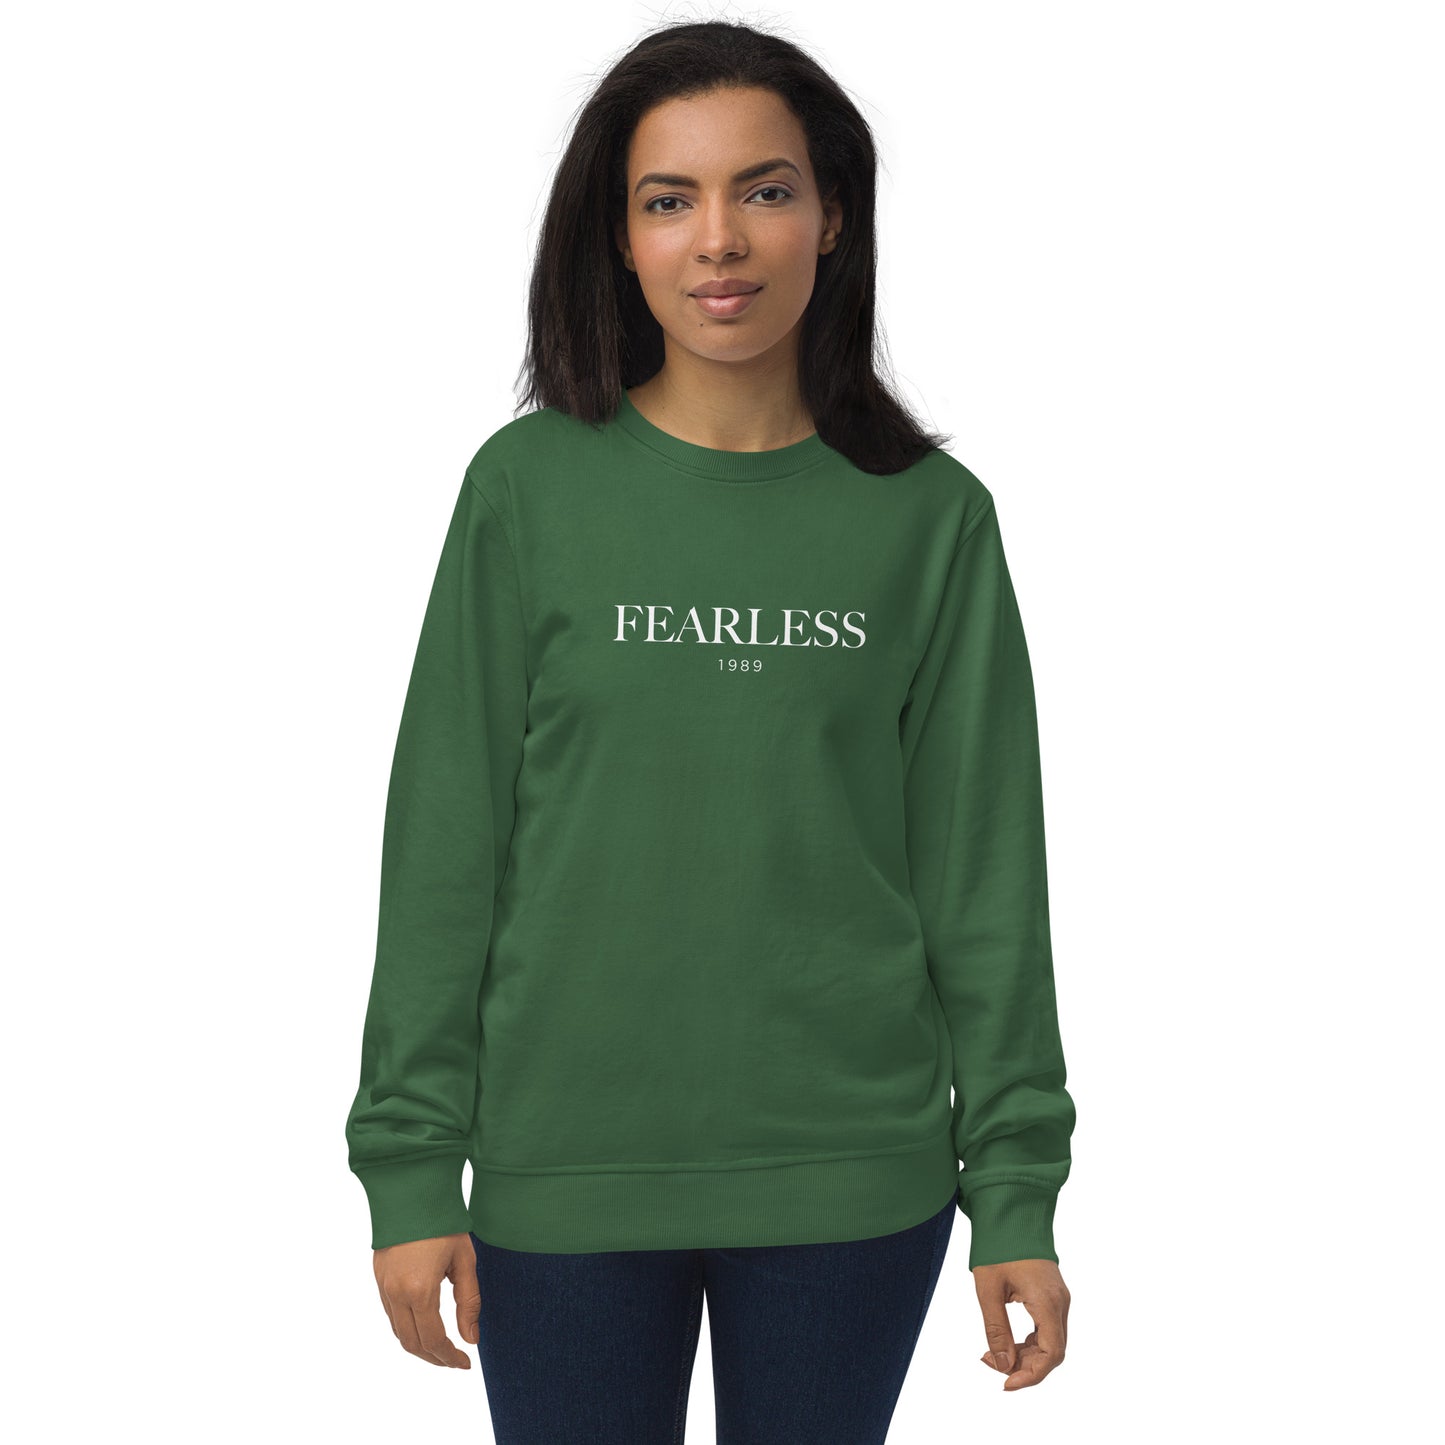 Fearless 1989 Women's Organic Cotton Sweatshirt